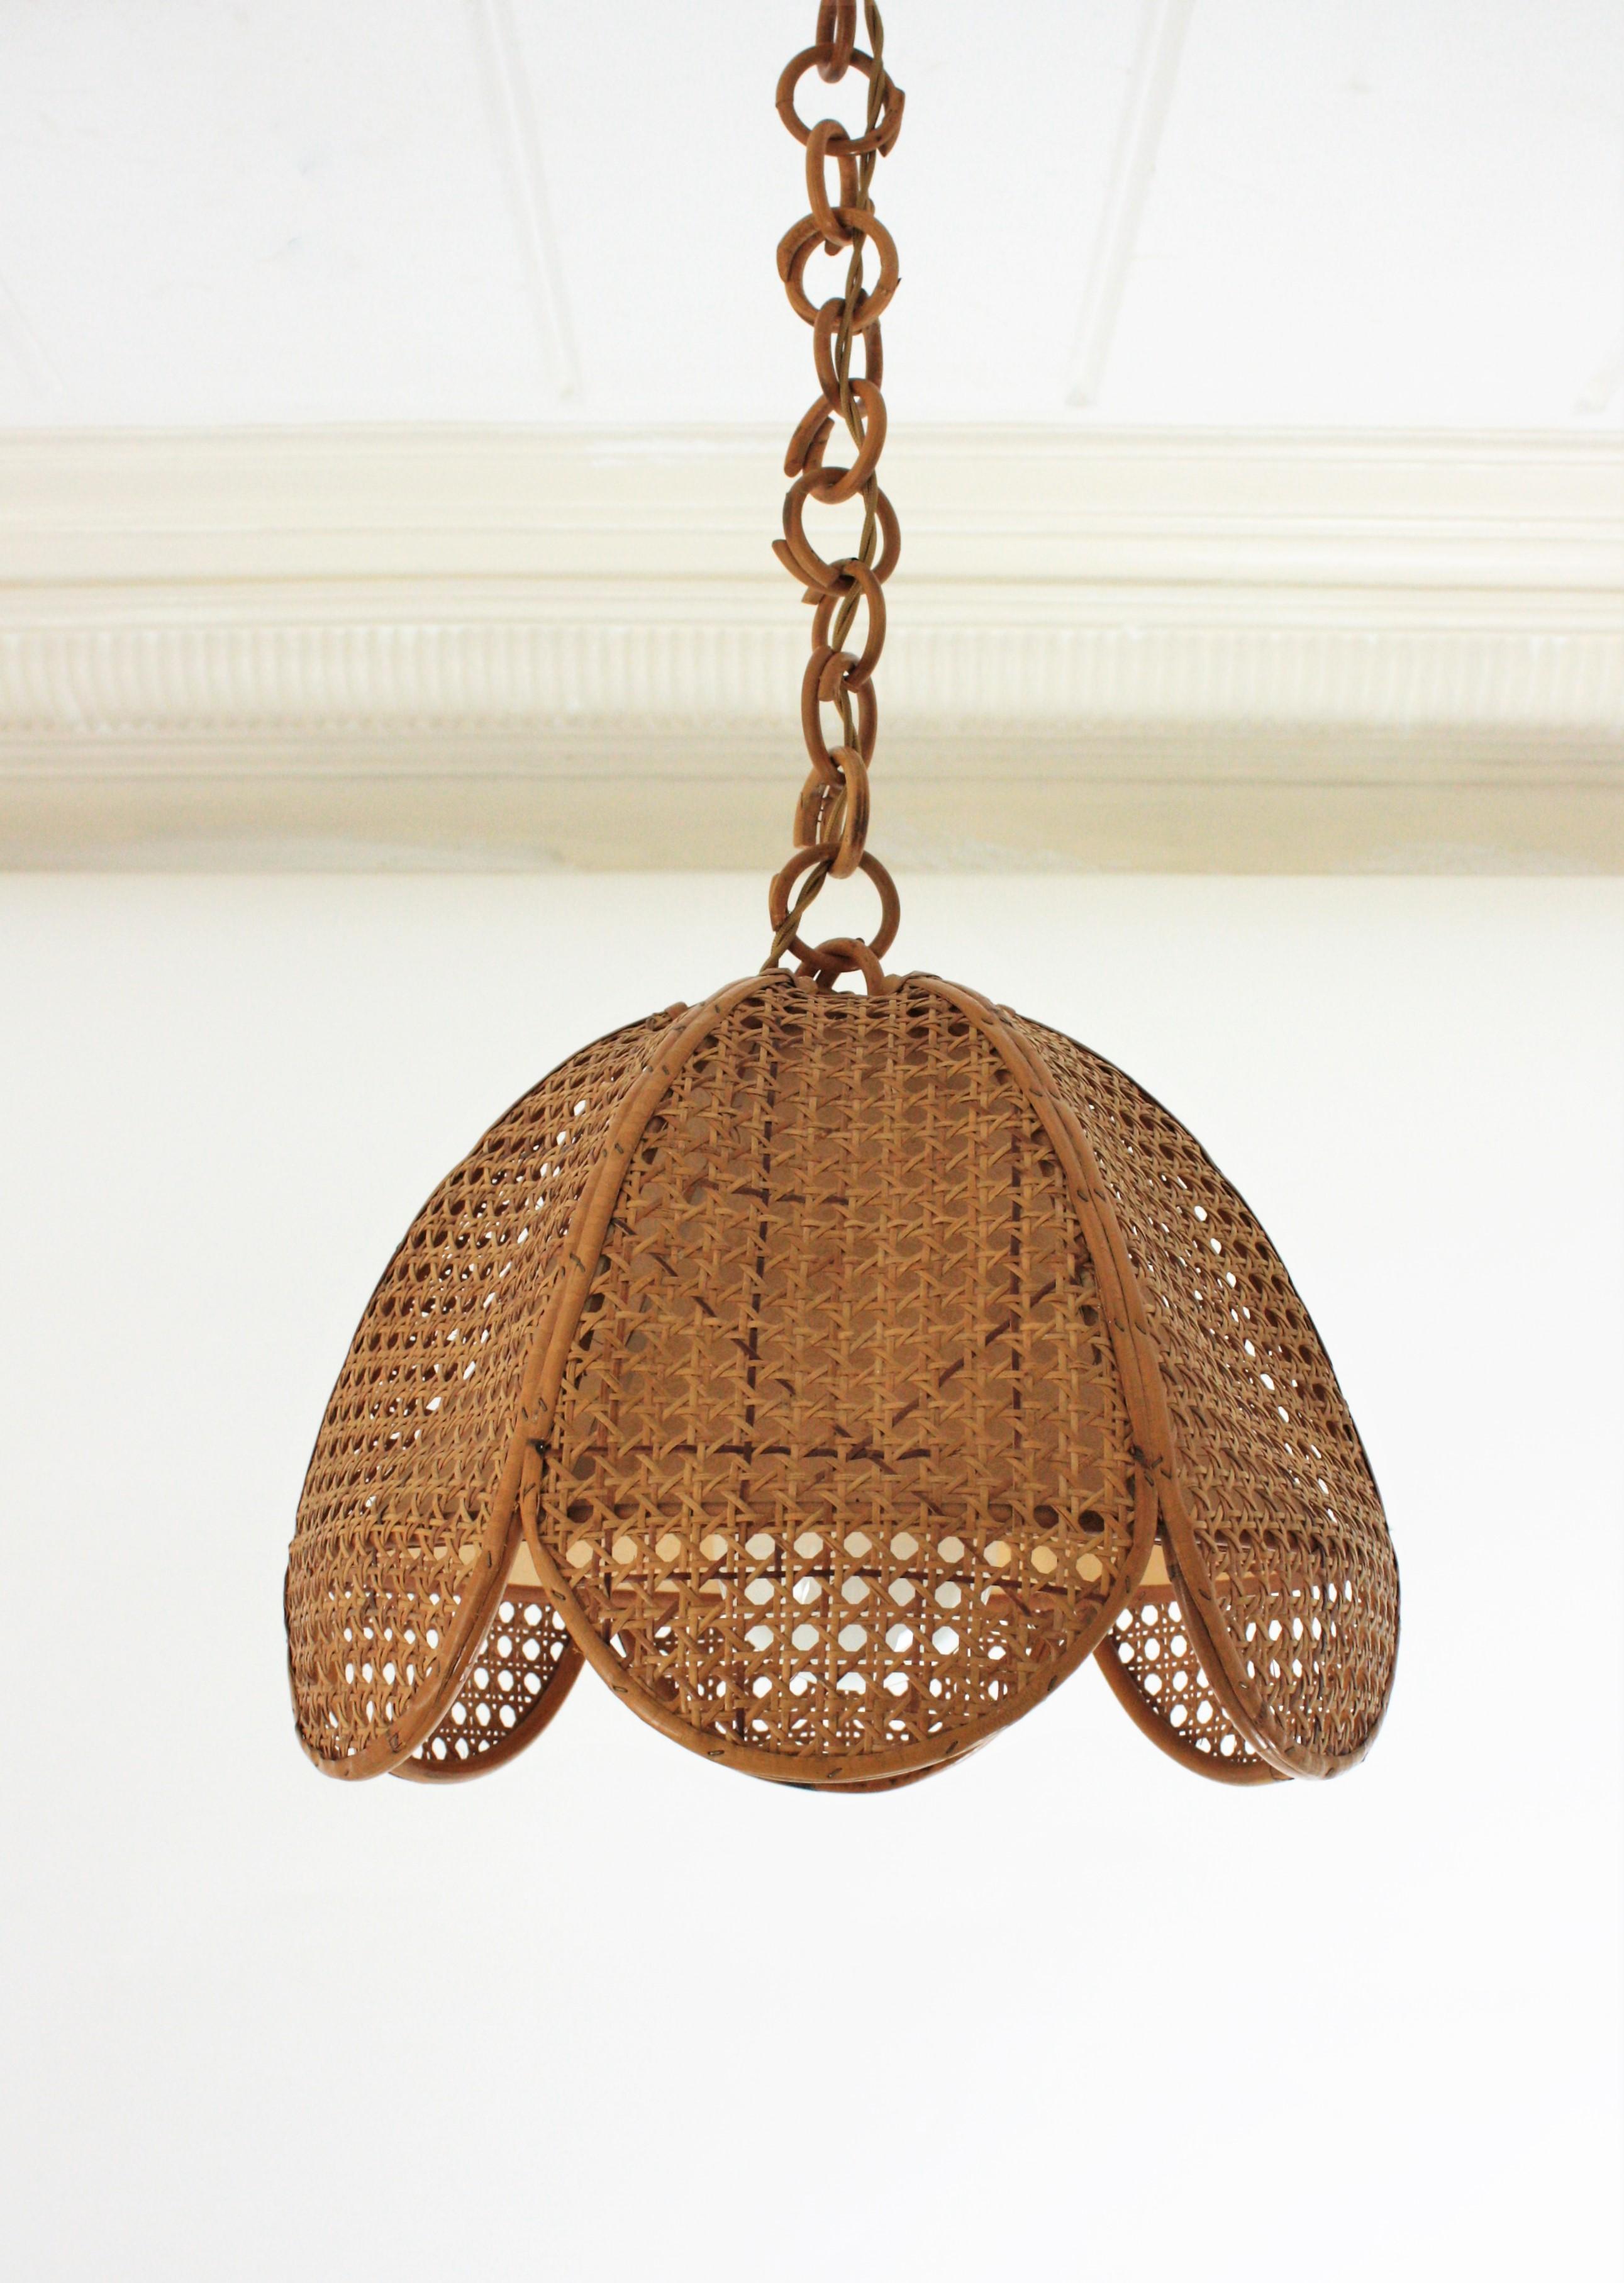 Spanish Modernist Woven Wicker Rattan Palm Pendant Light, 1960s For Sale 1